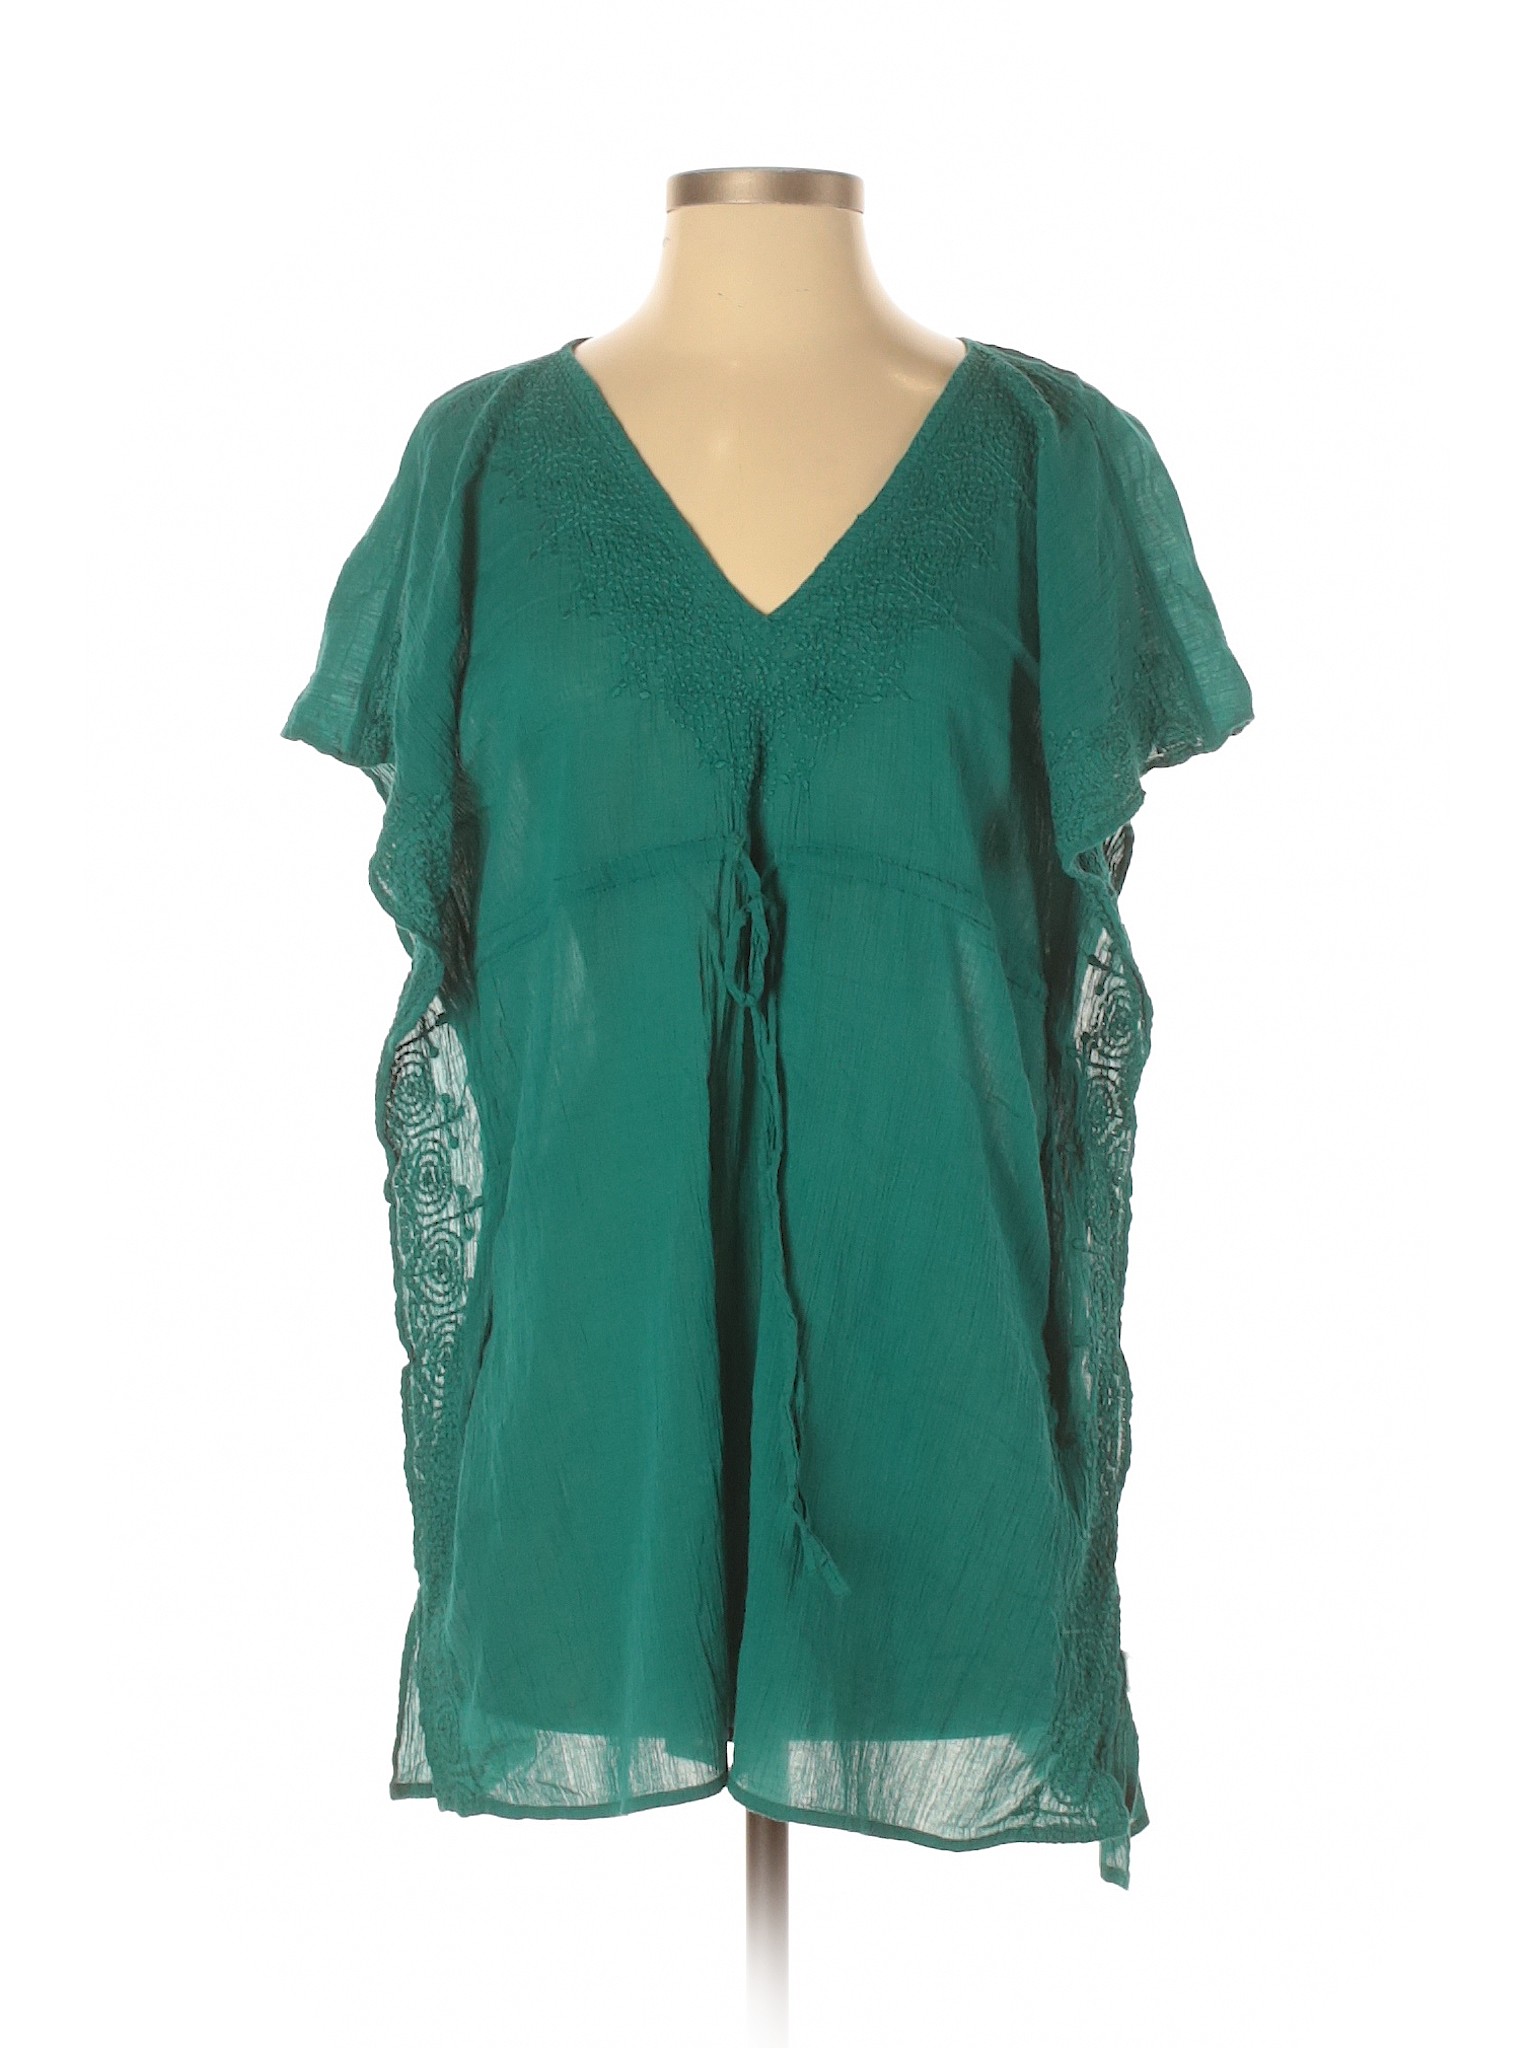 Old Navy Women Green Short Sleeve Blouse XS | eBay